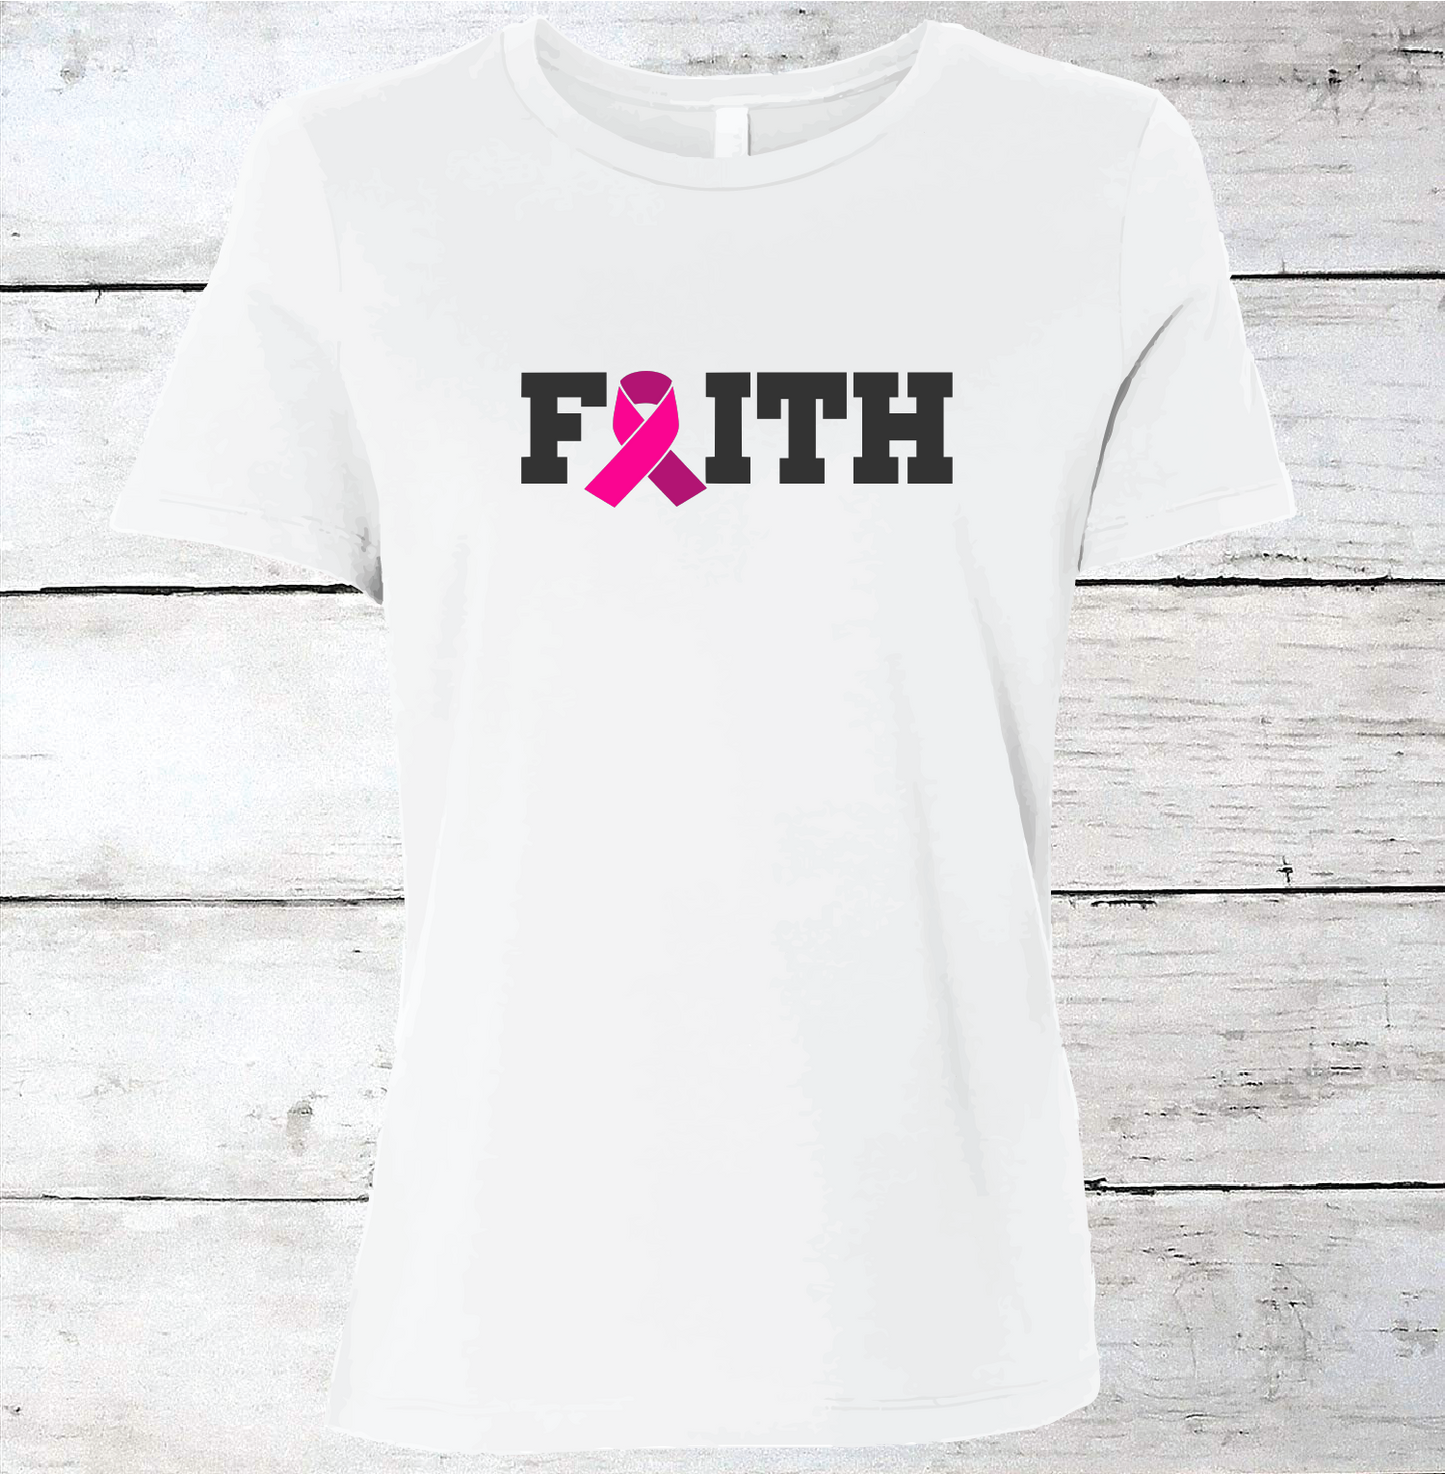 Breast Cancer Support - Faith T-Shirt